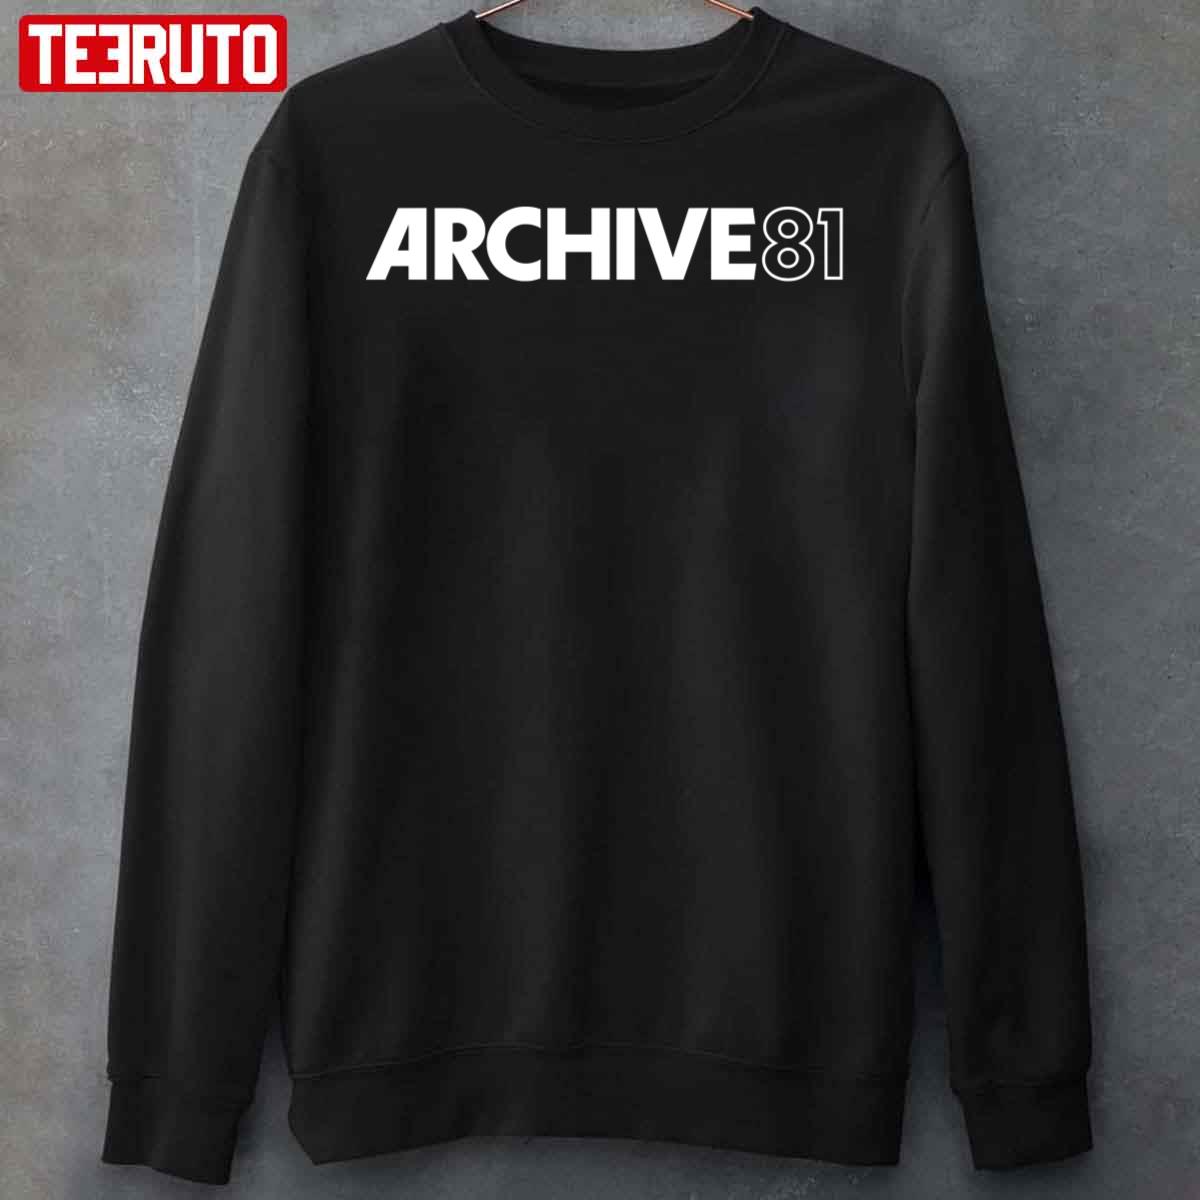 Archive 81 Unisex Sweatshirt